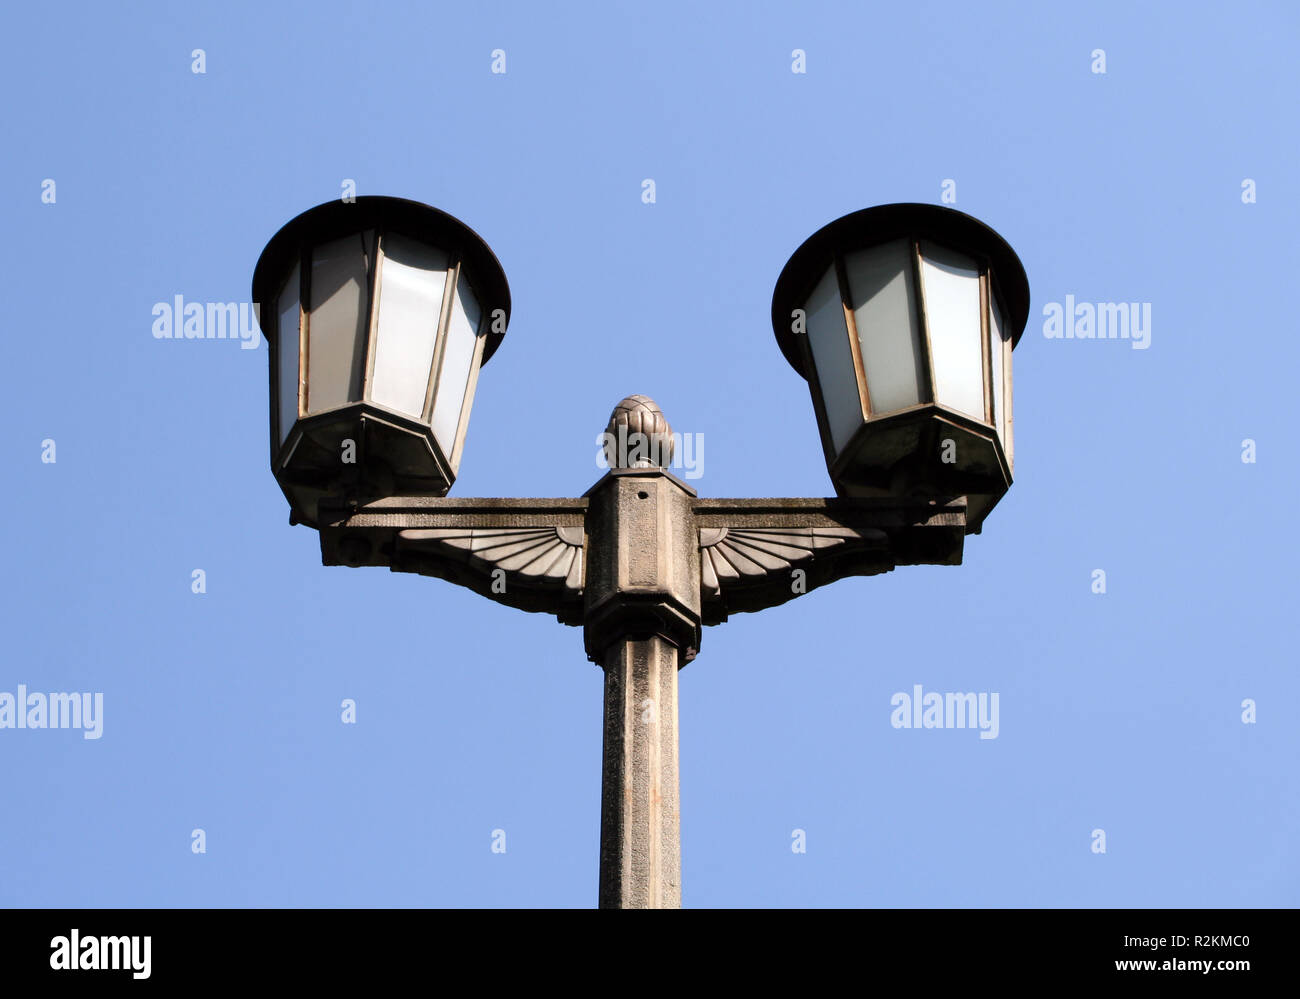 historic street lamp Stock Photo